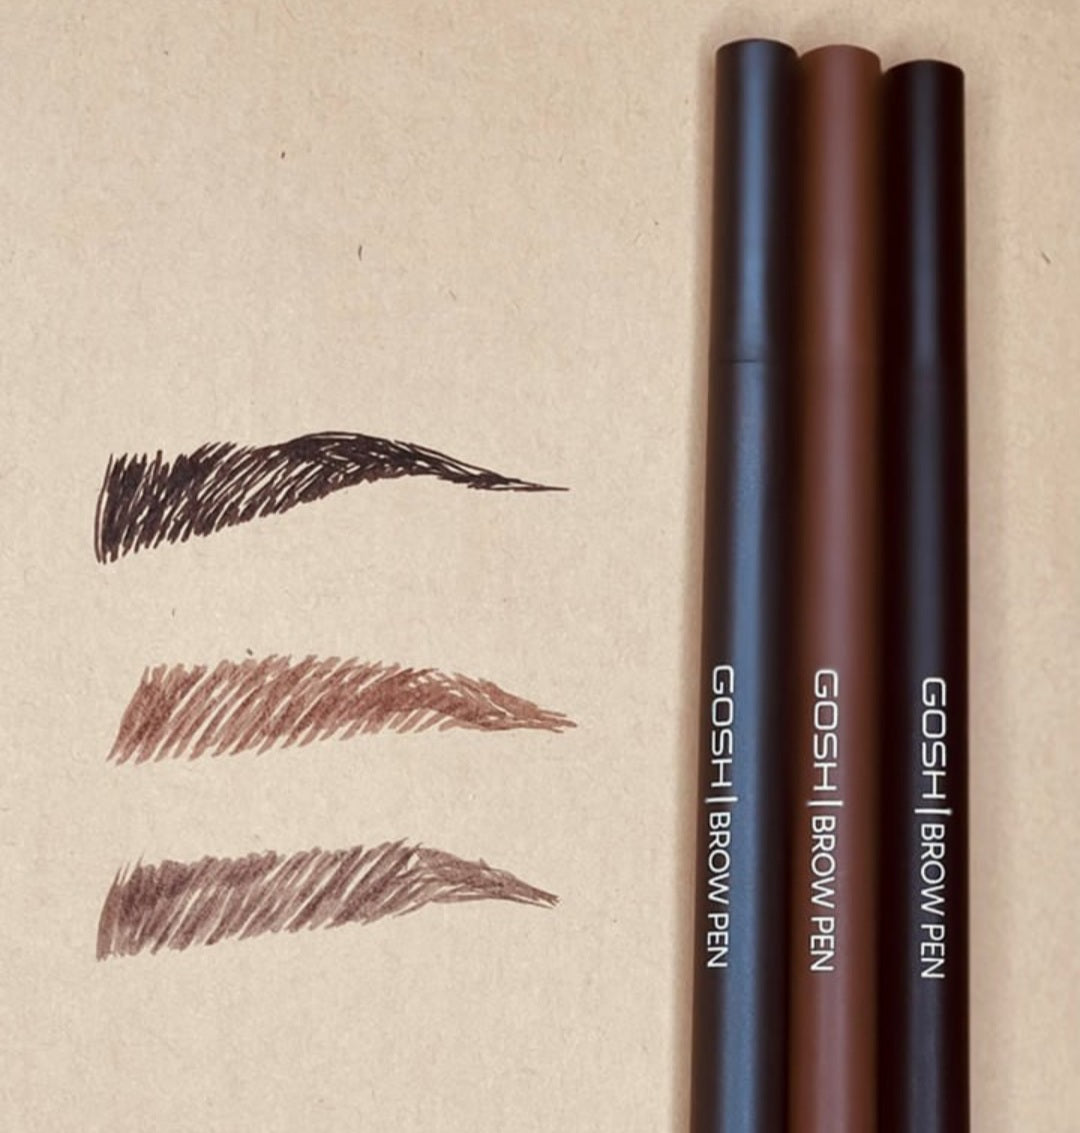 Gosh Brow Pen Brown Dark | جوش قلم تحديد الحواجب